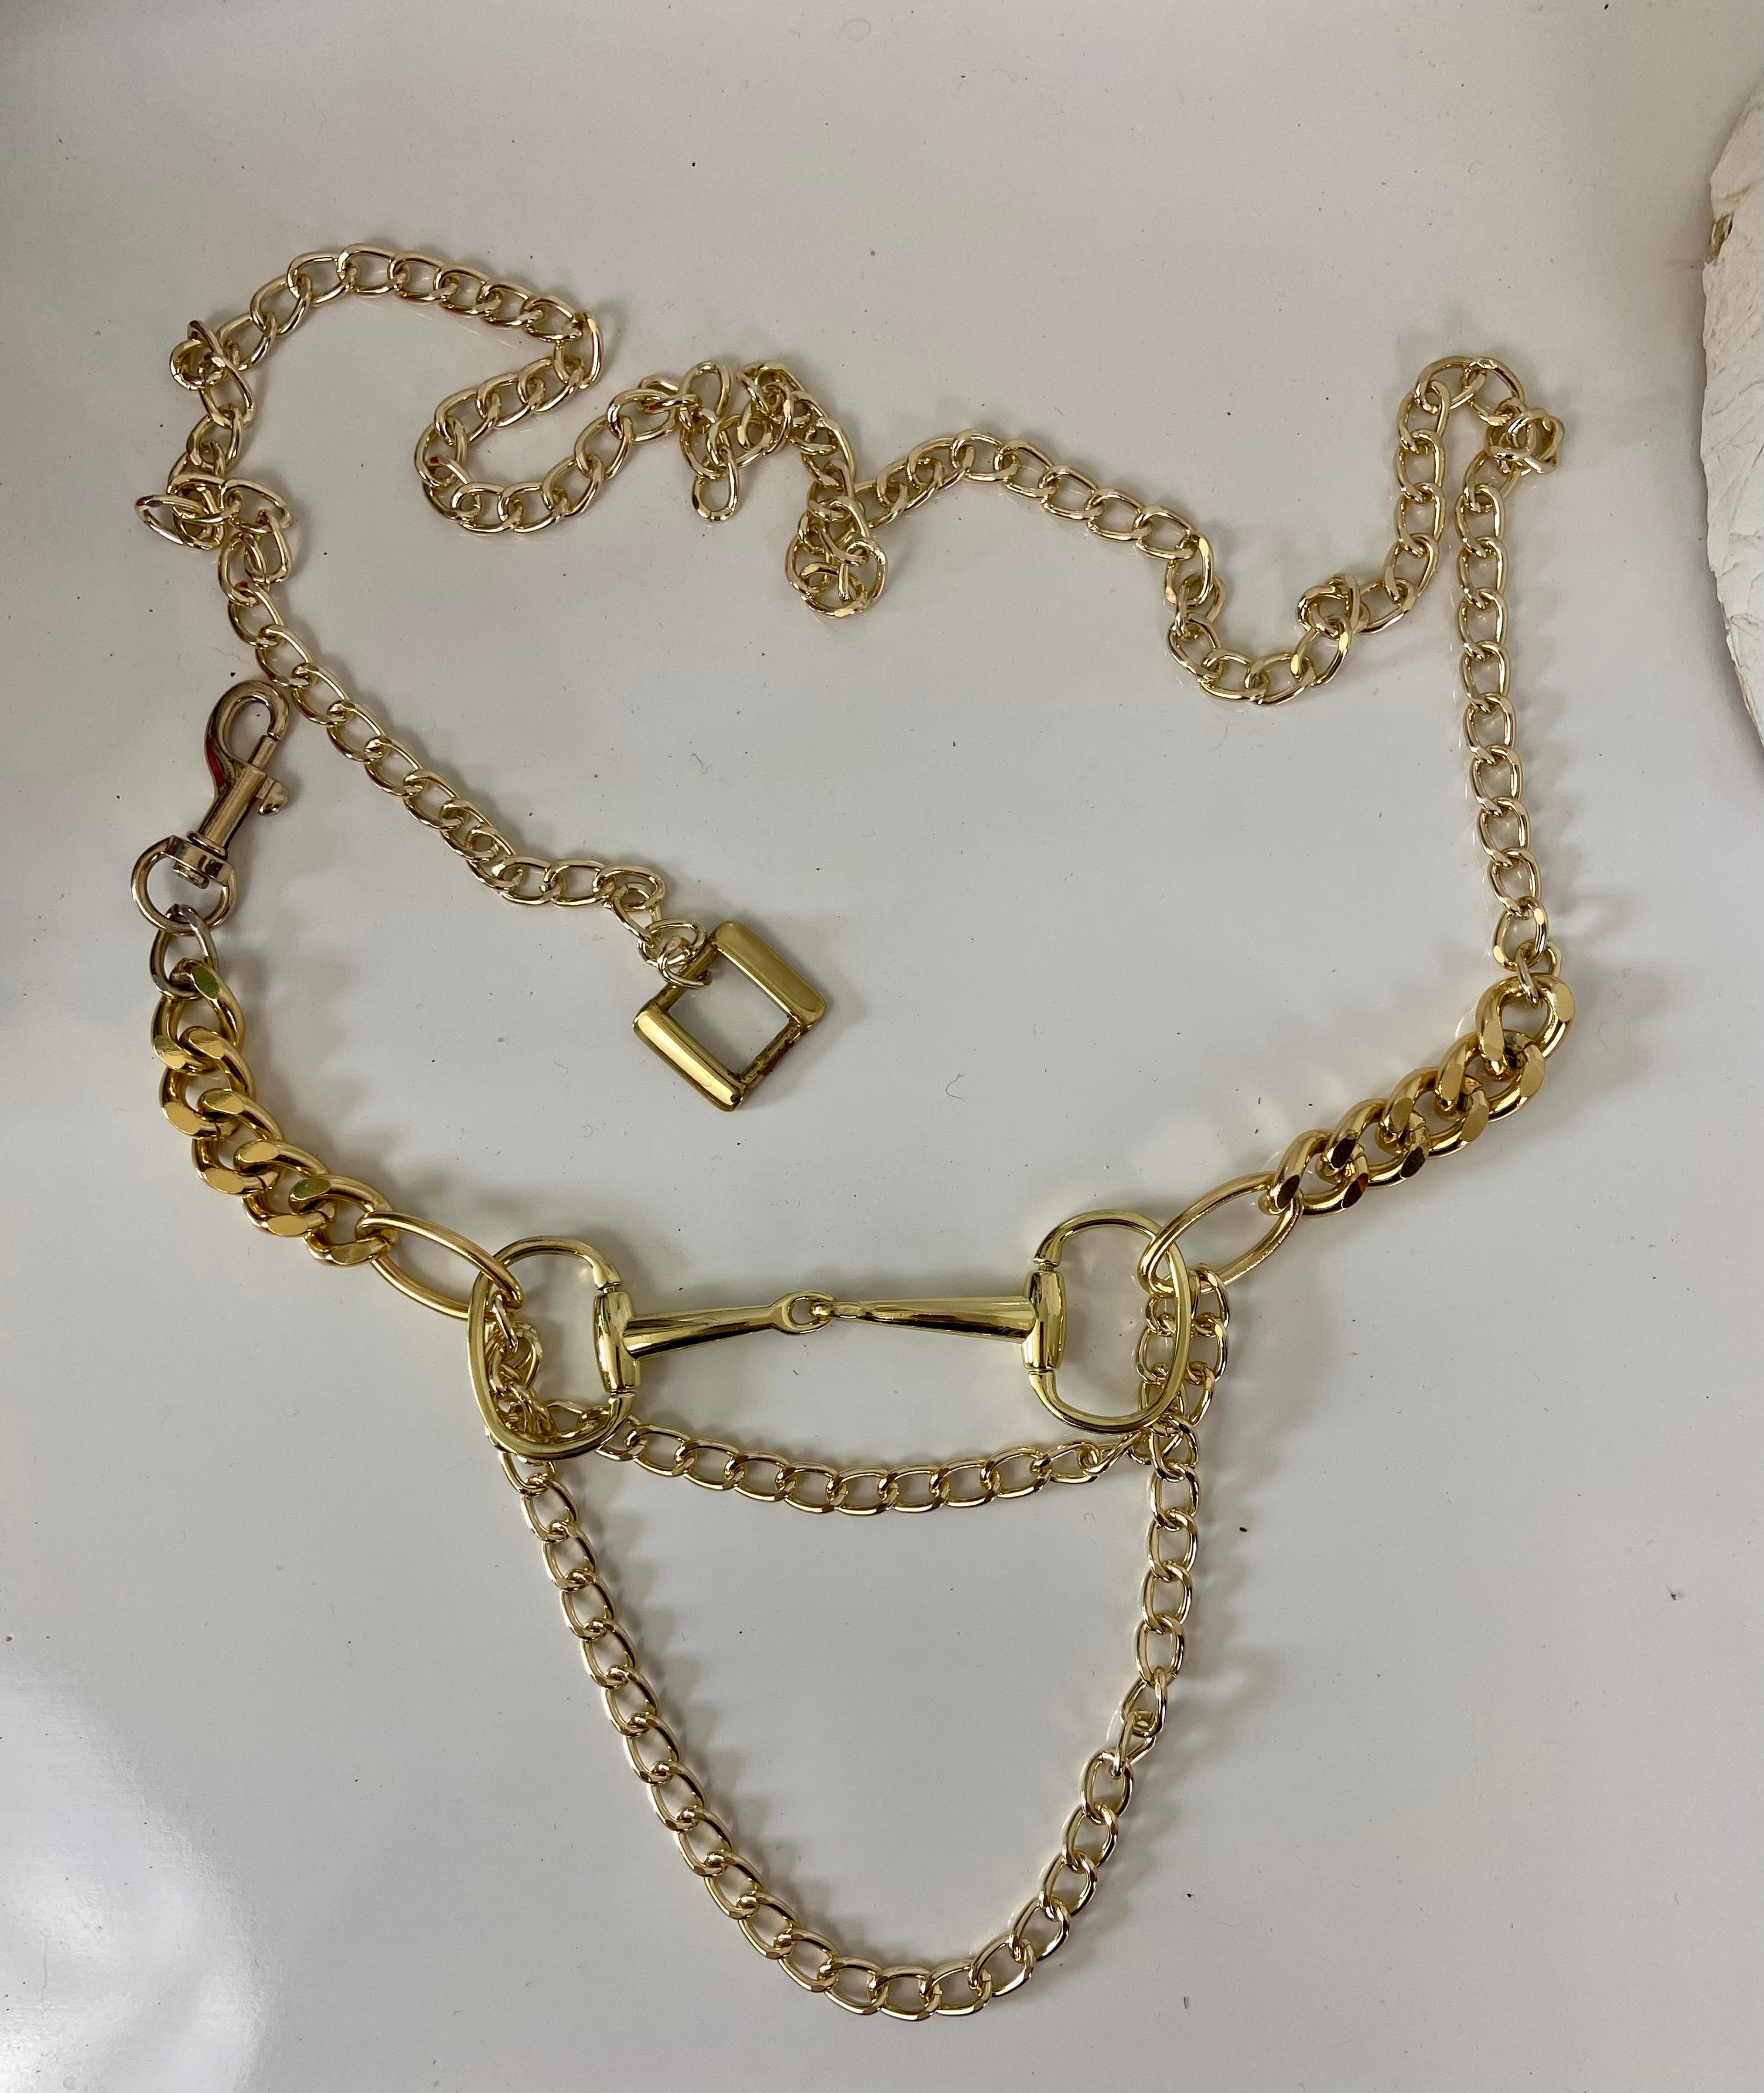 Gold chain belt